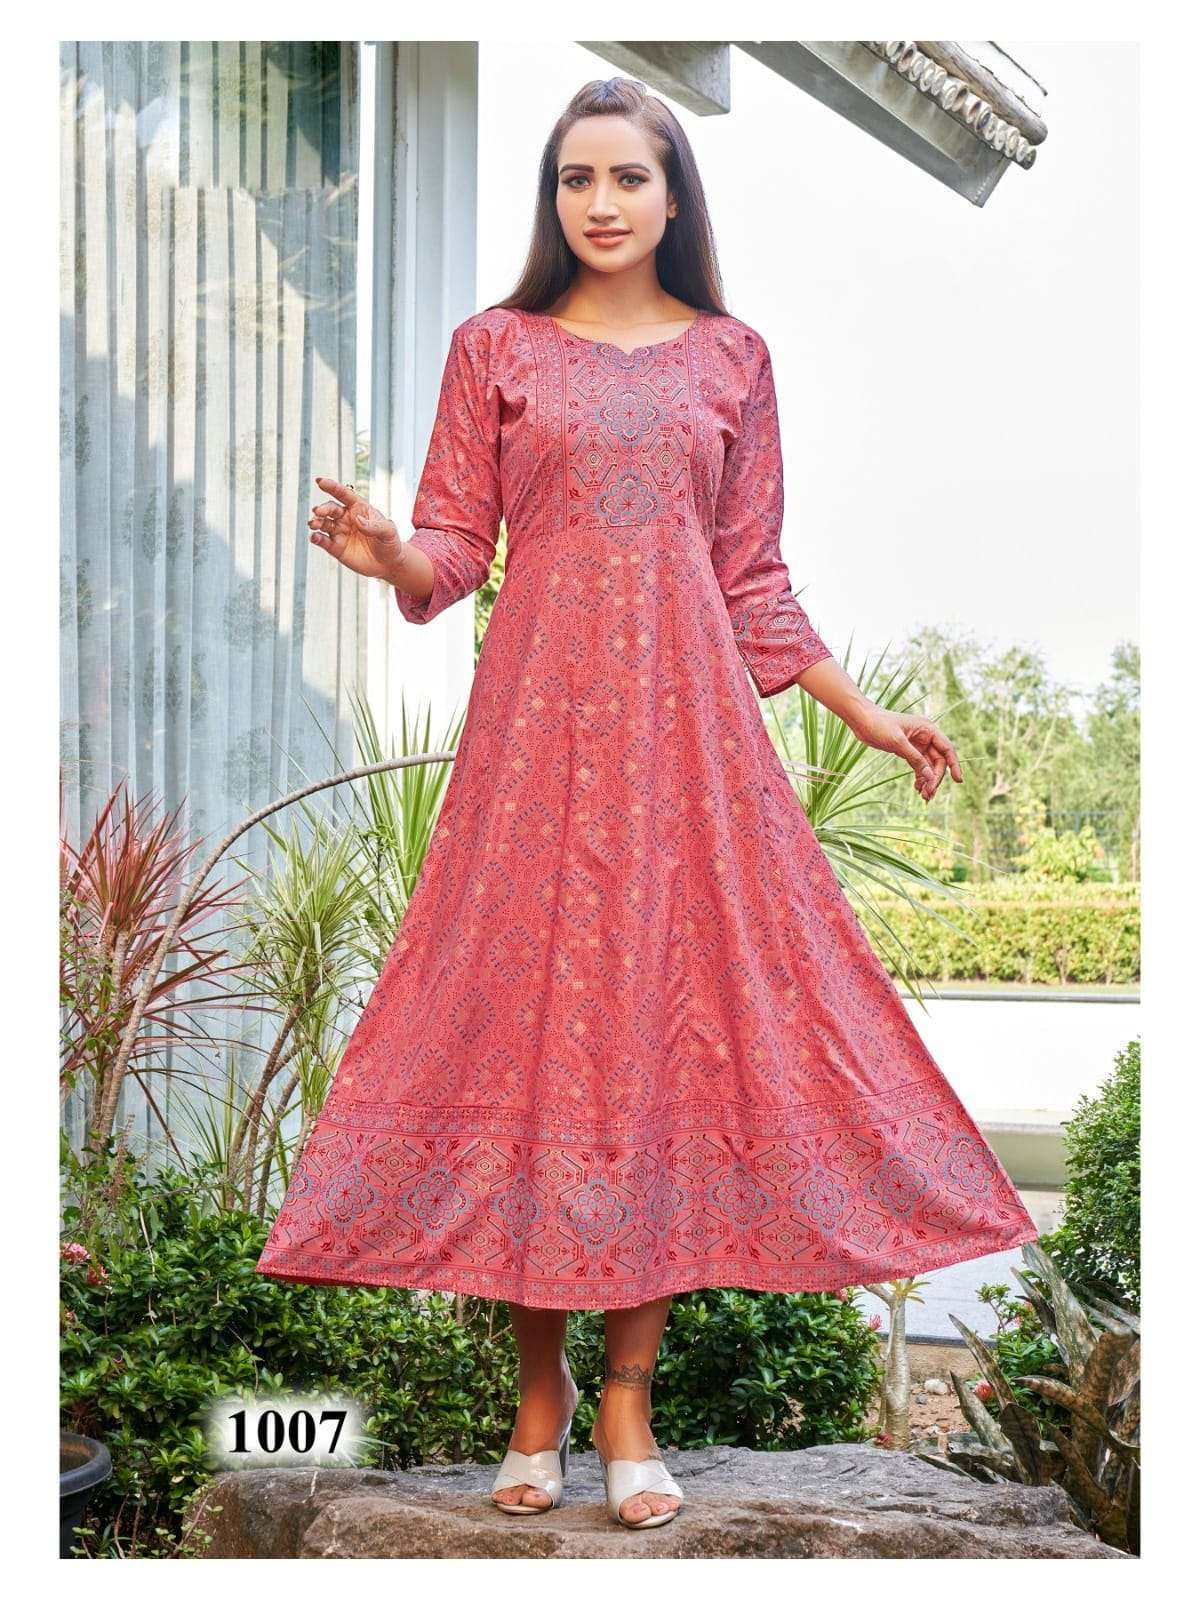 153110 Red Frill georgette umbrella style kurtis manufacturer in surat -  Reewaz International | Wholesaler & Exporter of indian ethnic wear catalogs.